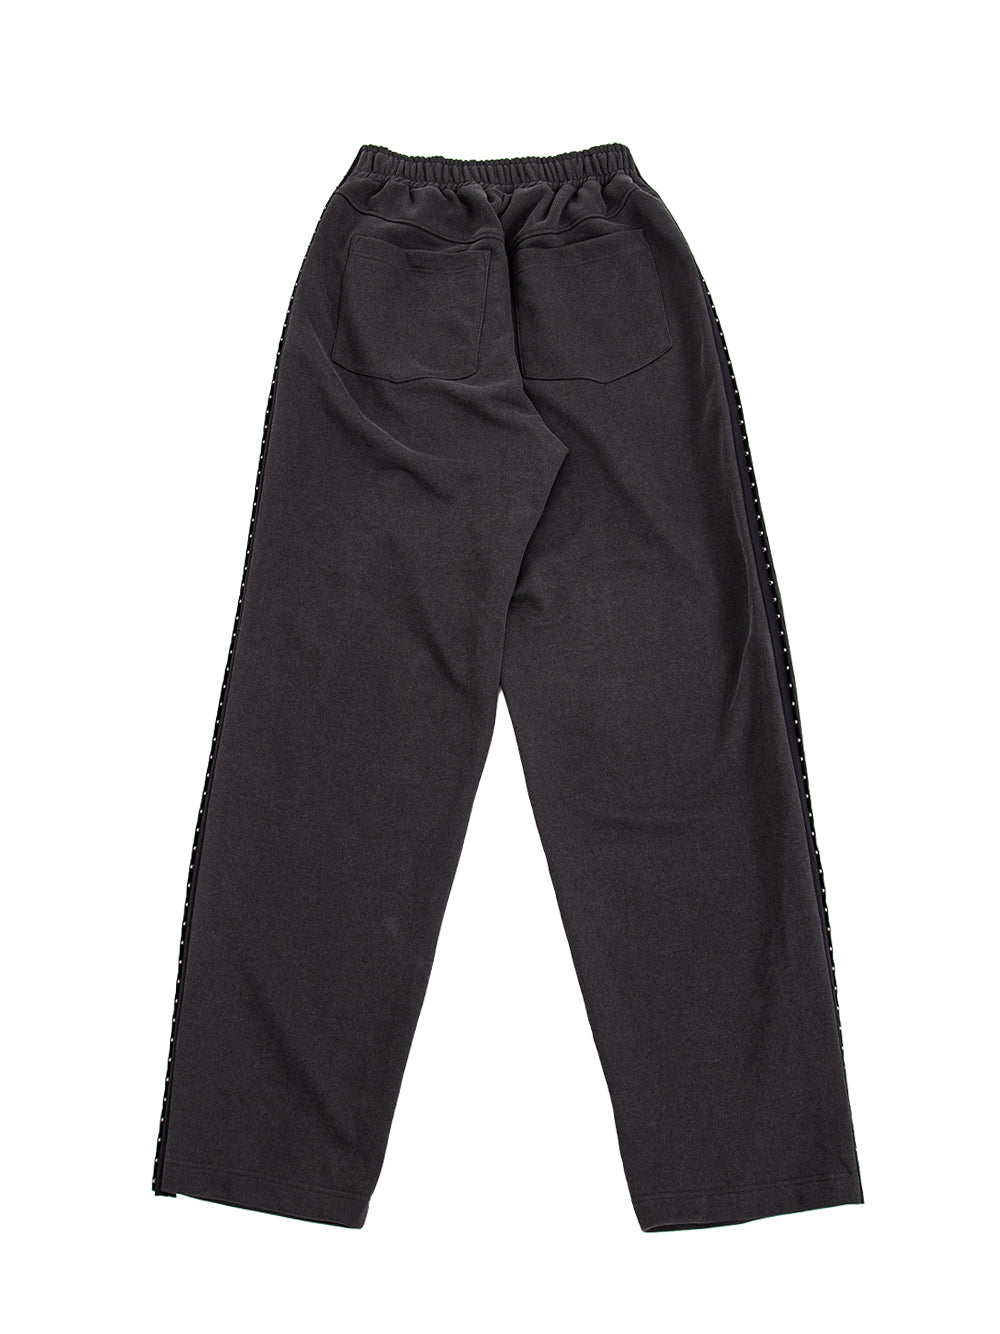 Hook Training Pants (Black)